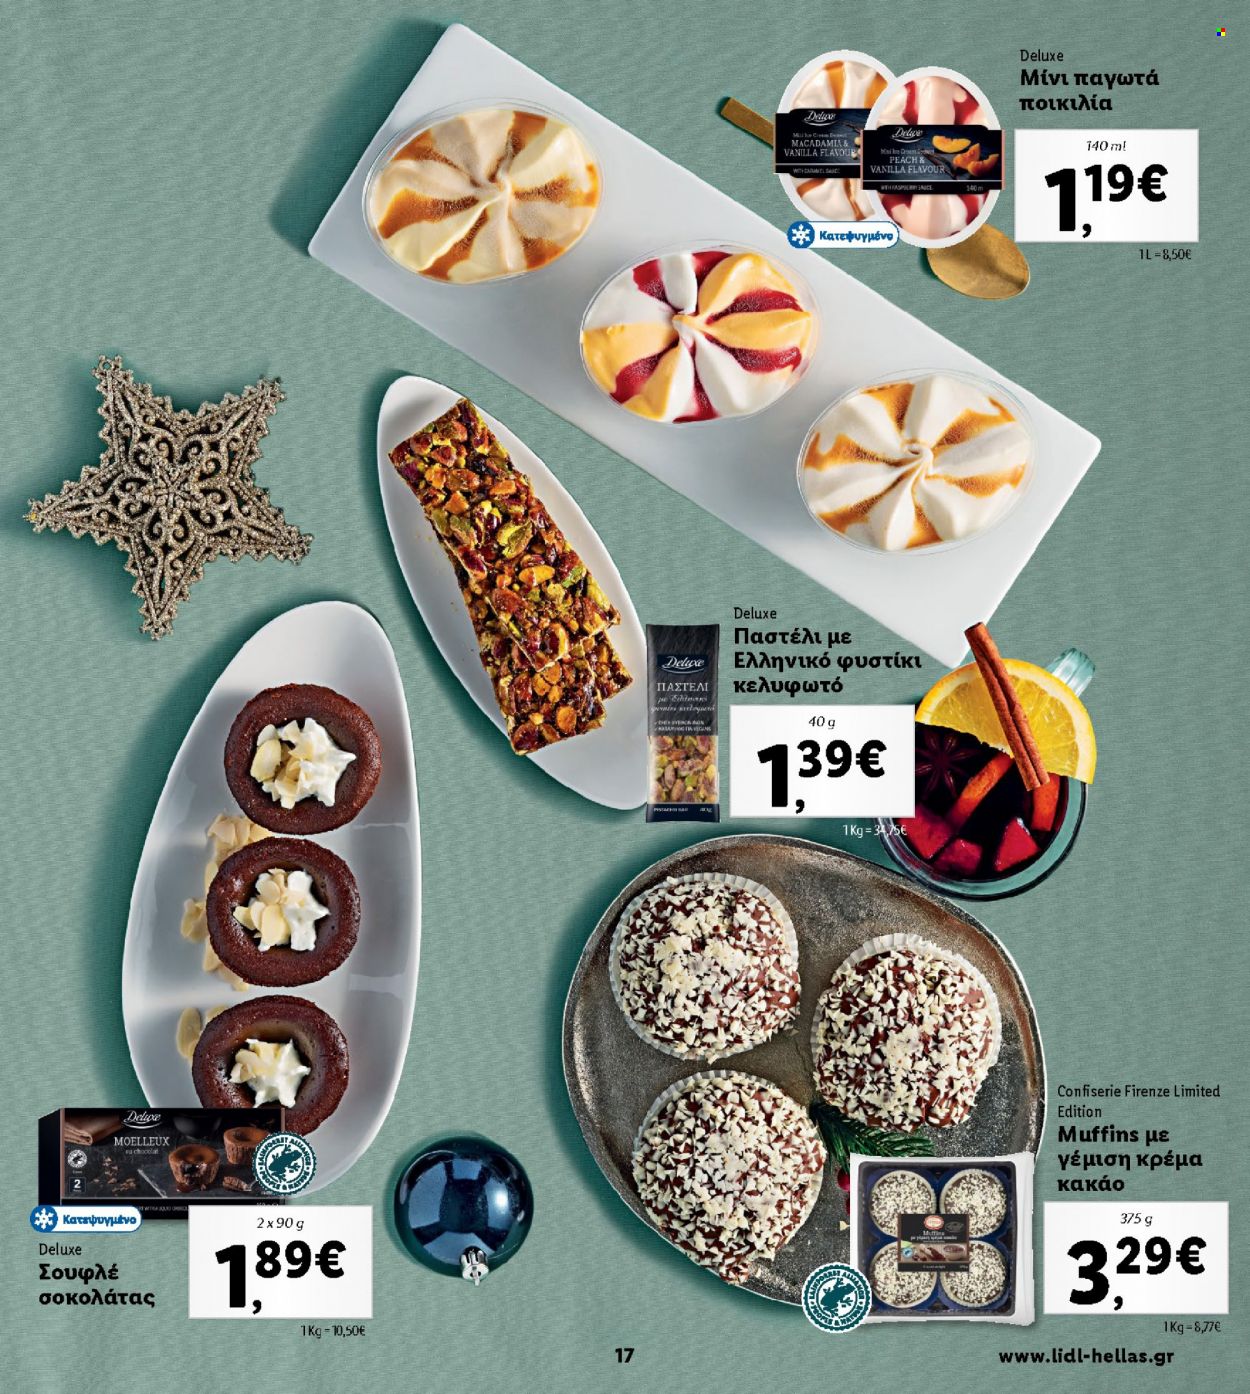 thumbnail - Φυλλάδια Lidl - Εκπτωτικά προϊόντα - muffins, κακάο, macadamia. Σελίδα 17.